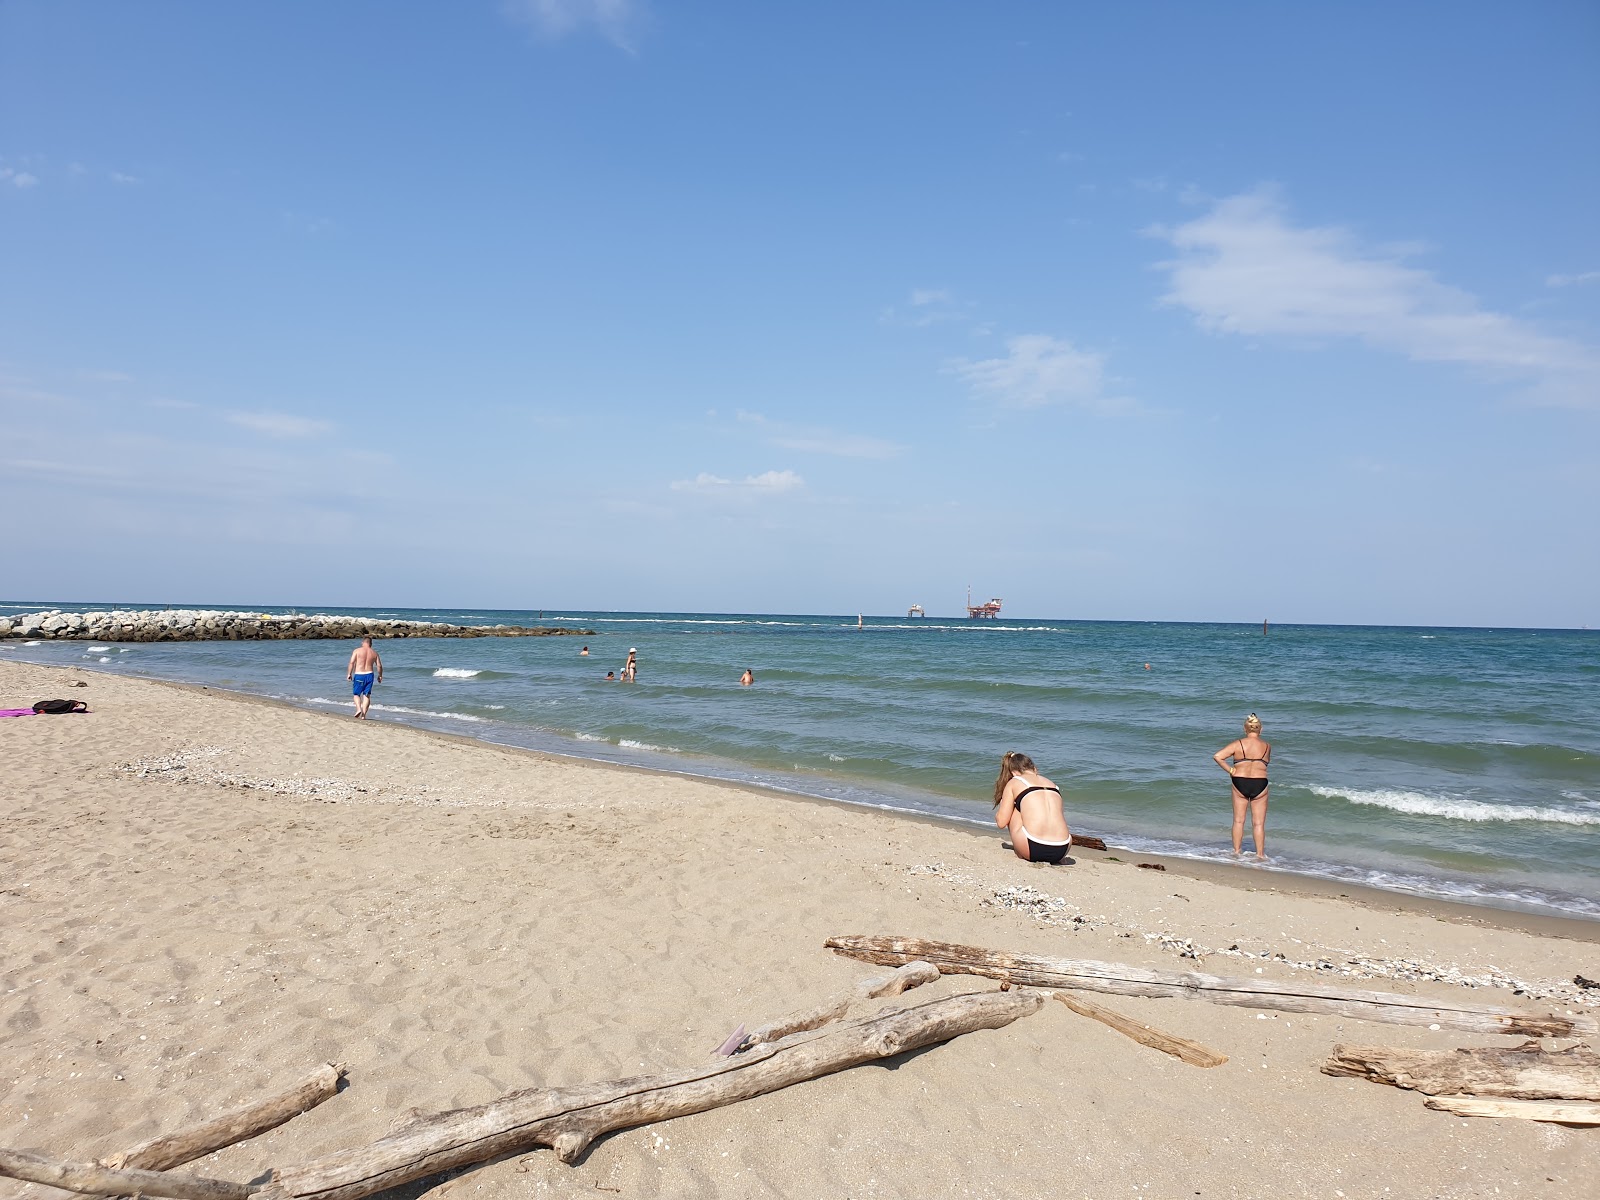 Foto von Spiaggia della Bassona mit geräumiger strand